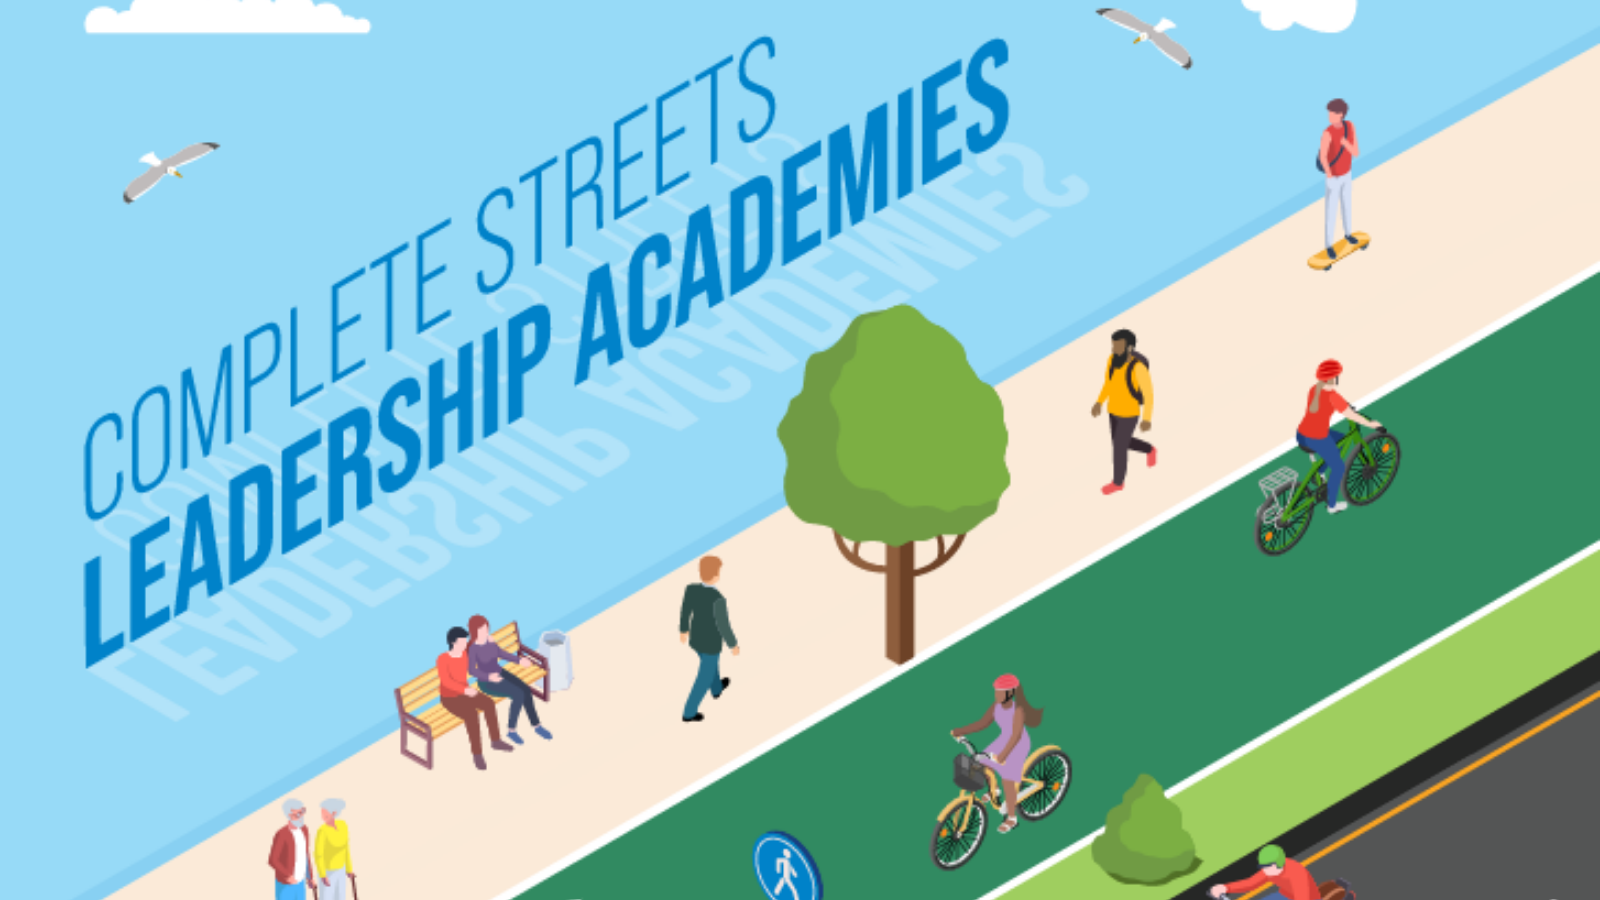 Complete Streets Leadership Academies Report